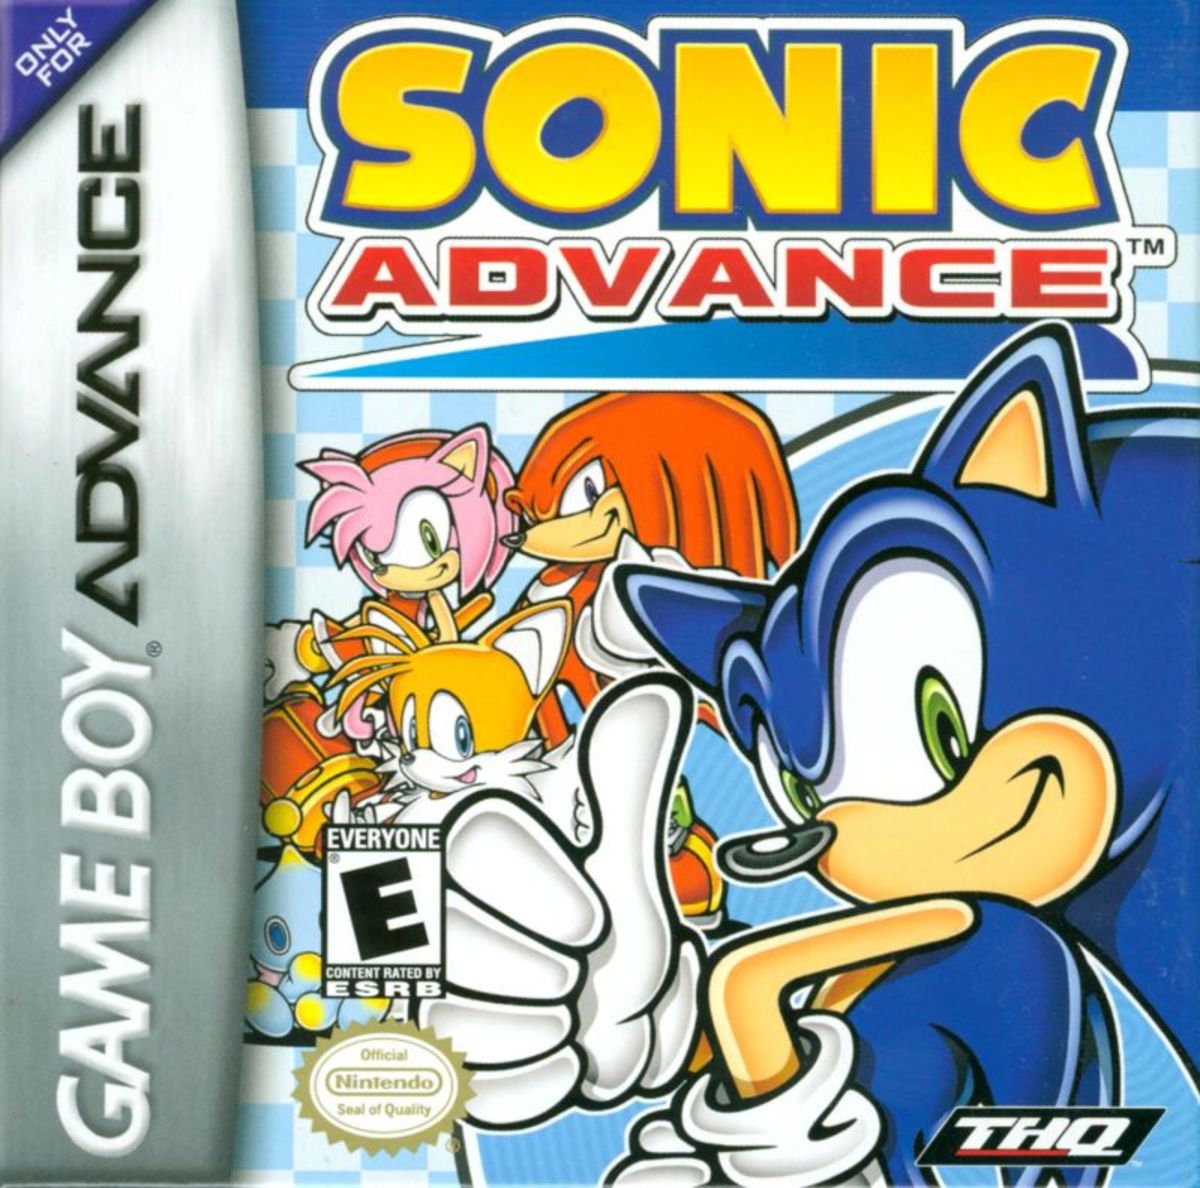 "Sonic Advance" GameBoy Advance Cover Art